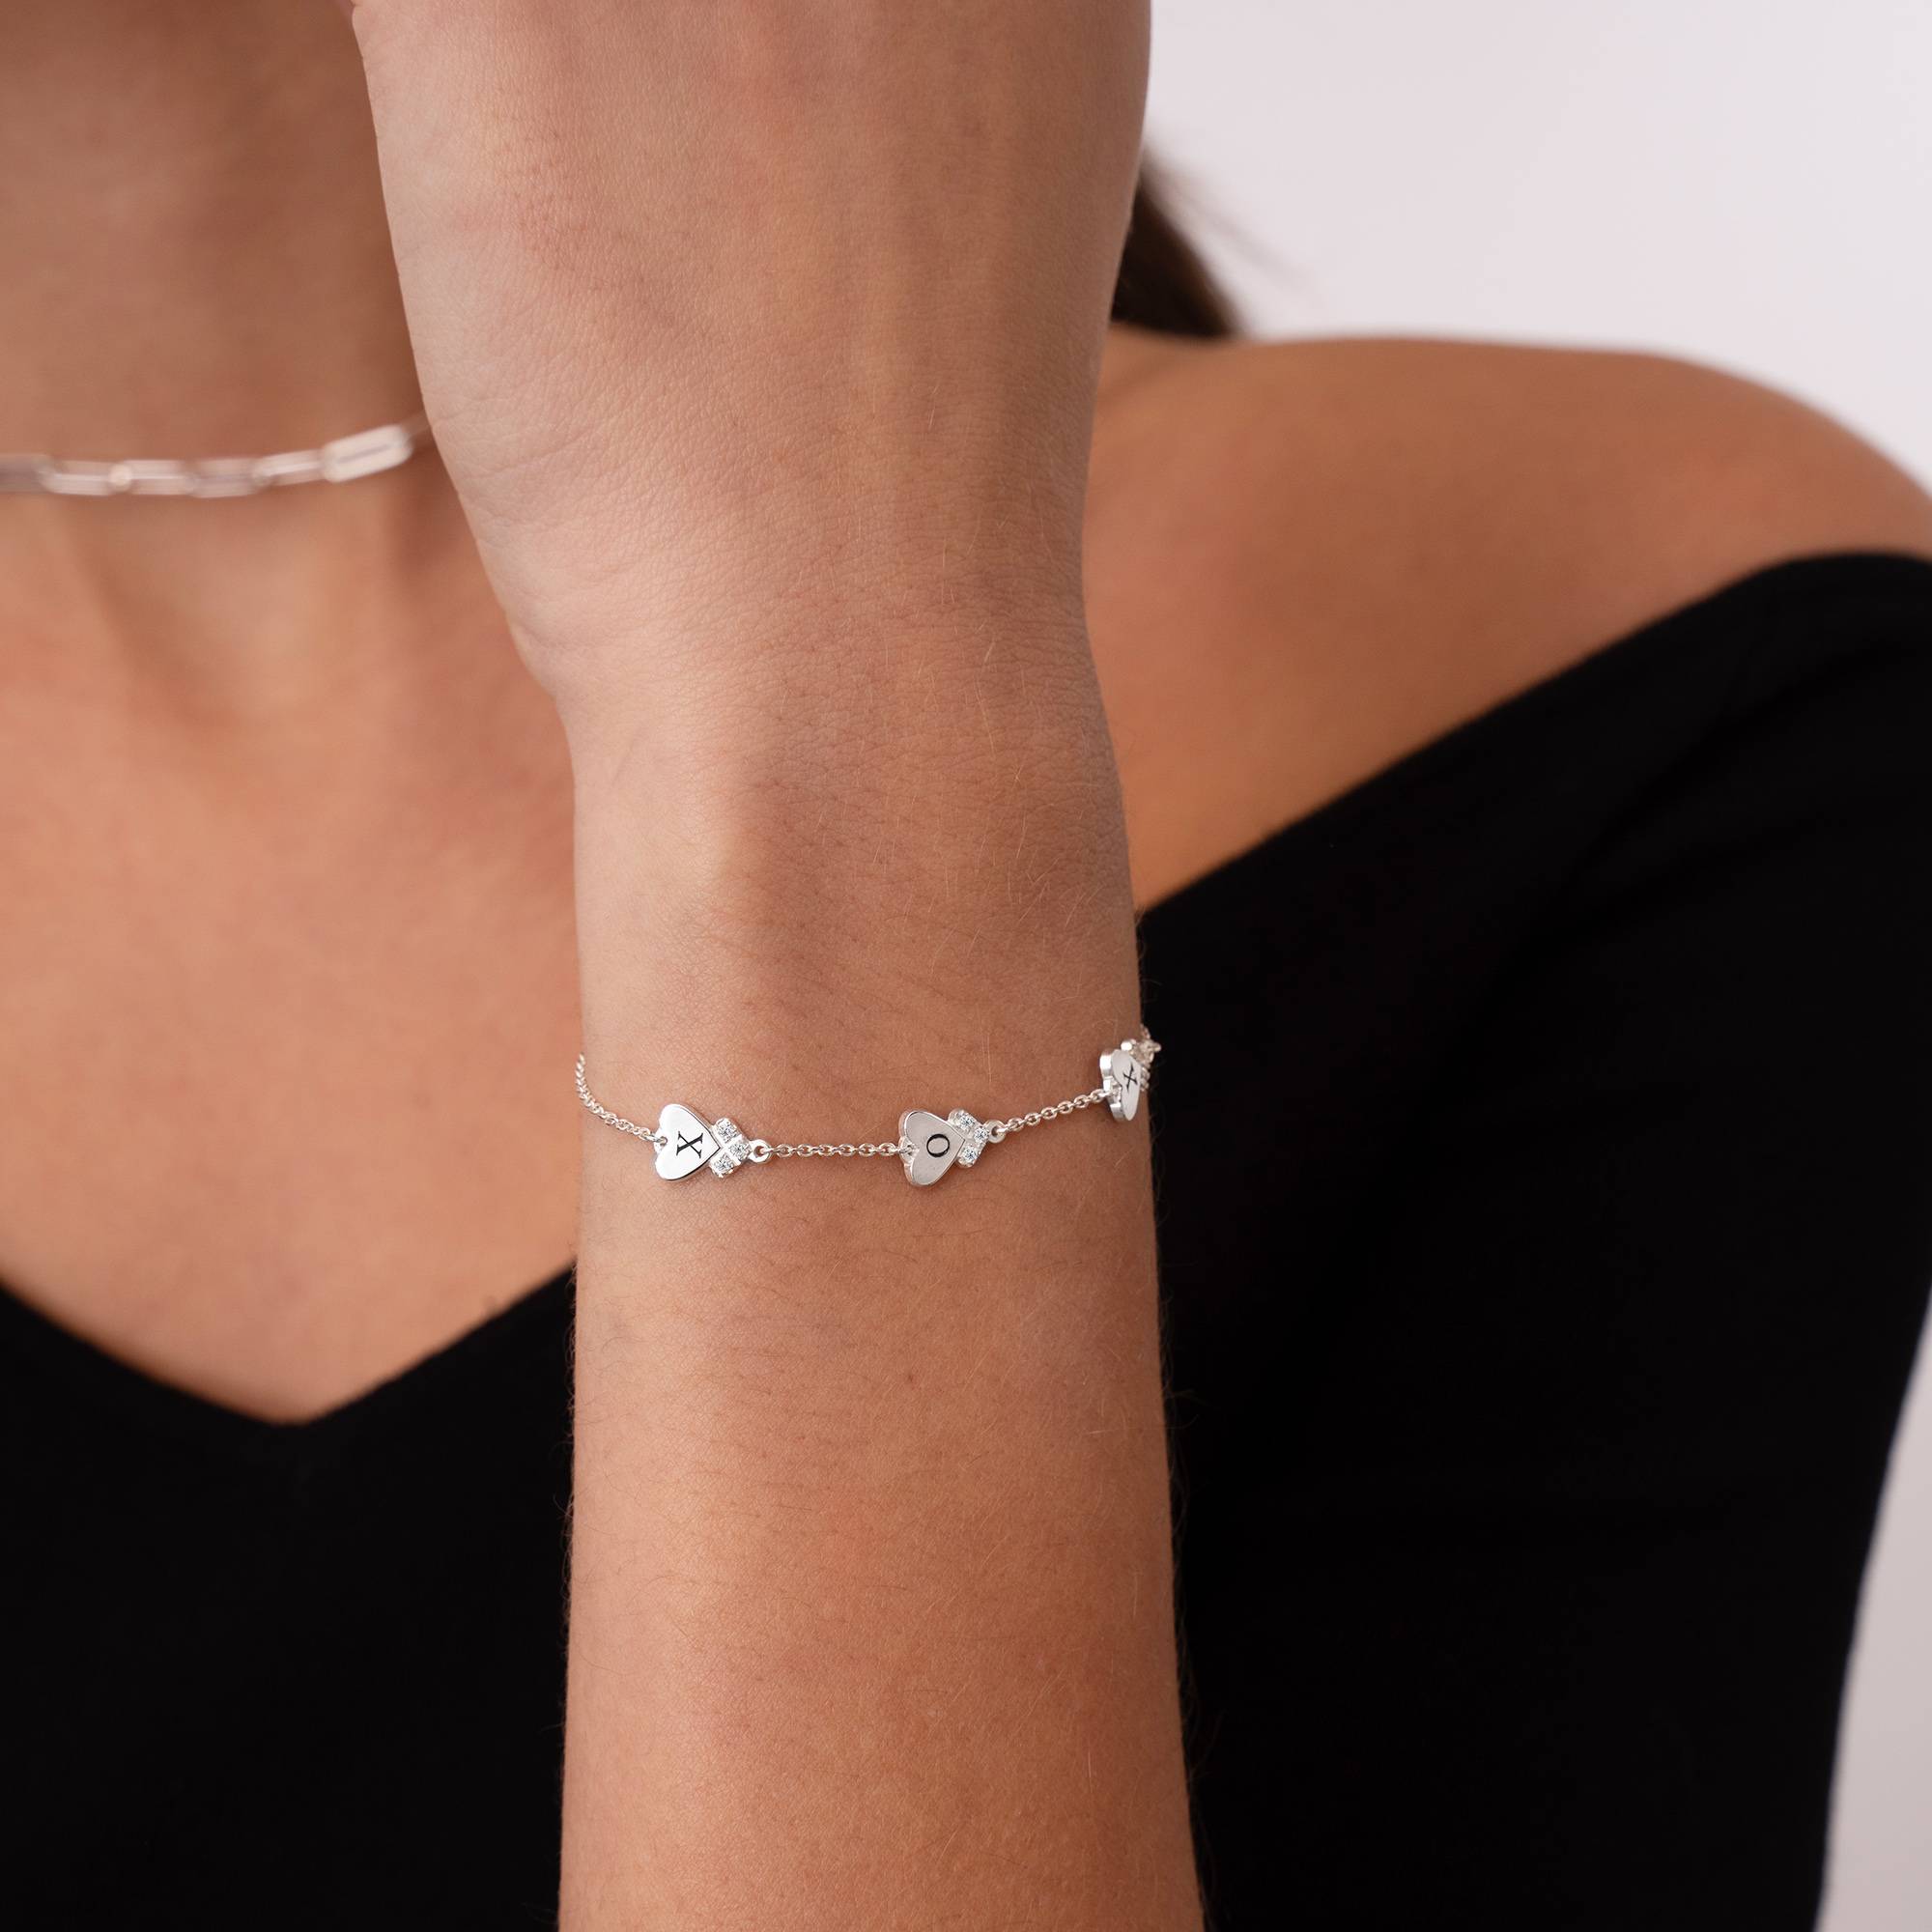 Dakota Heart Initial Bracelet with Diamonds in Sterling Silver-5 product photo